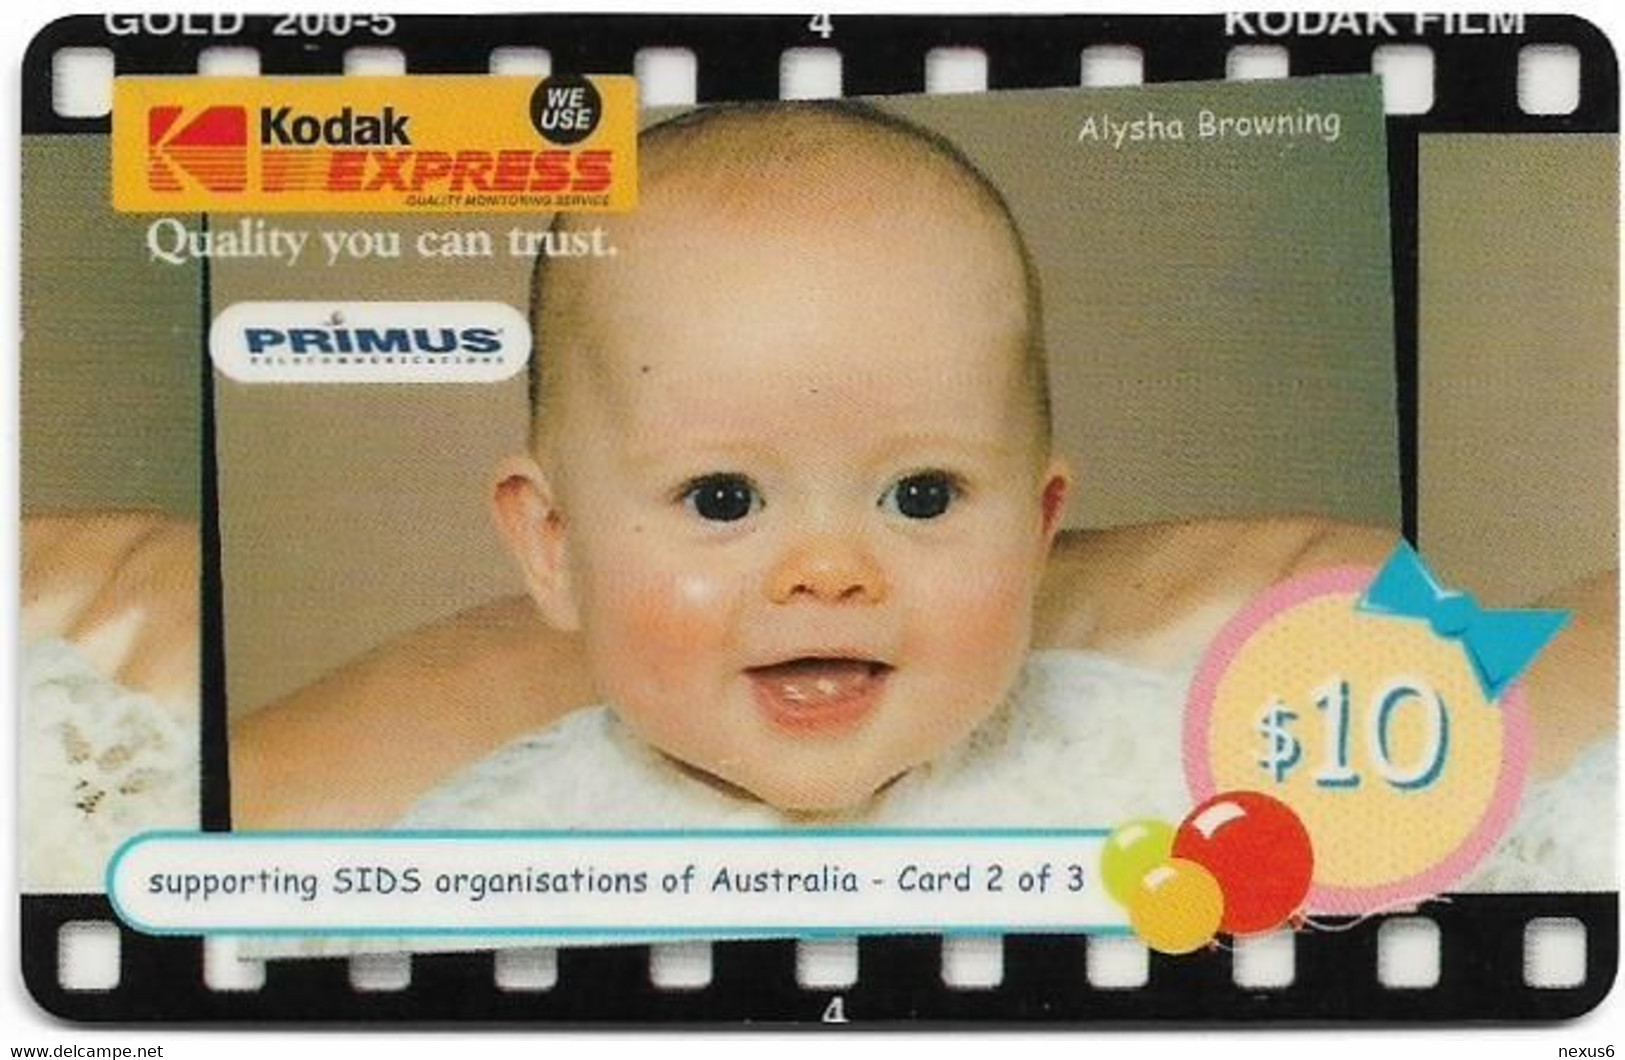 Australia - Primus - Kodak Express 2-3, Babies, Exp.09.1999, GSM Refill 10$, Used - Australia